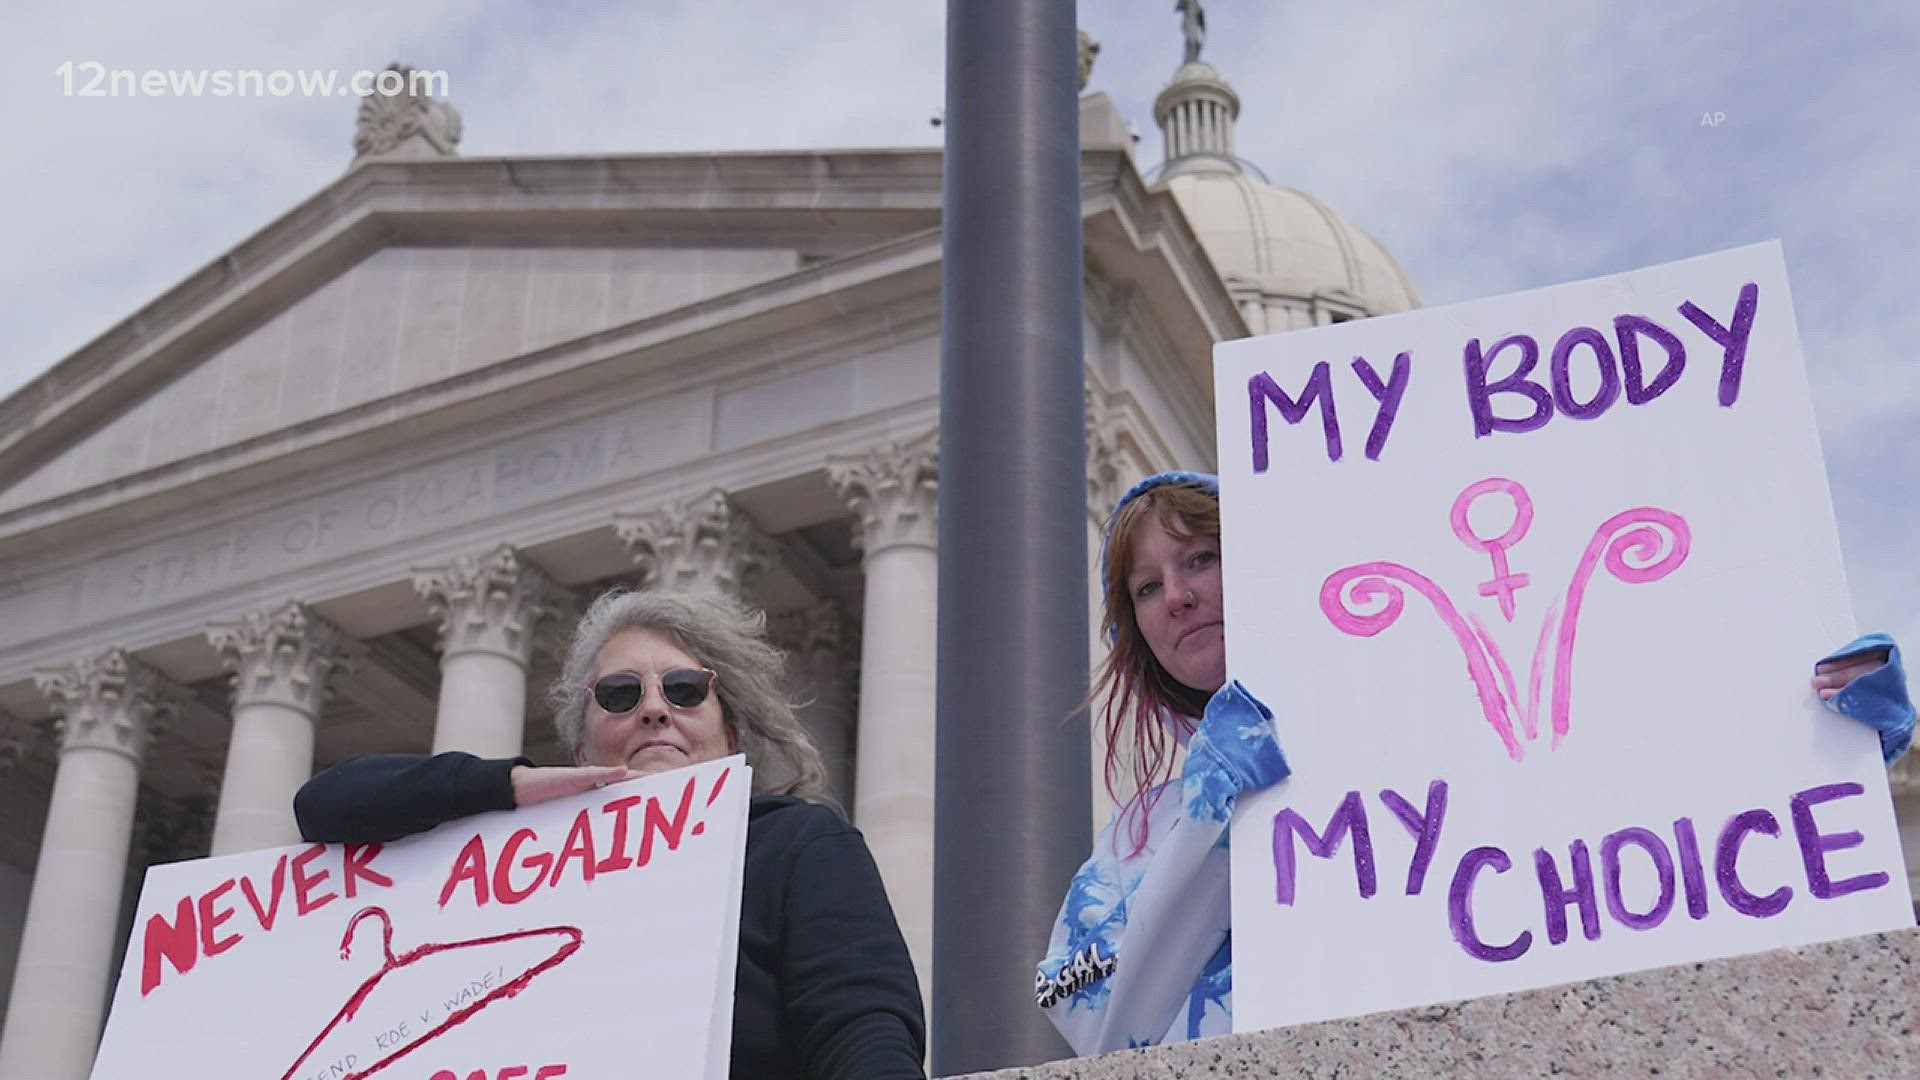 A viral claim online said half of Texas women seeking abortions travel to Oklahoma to seek care.